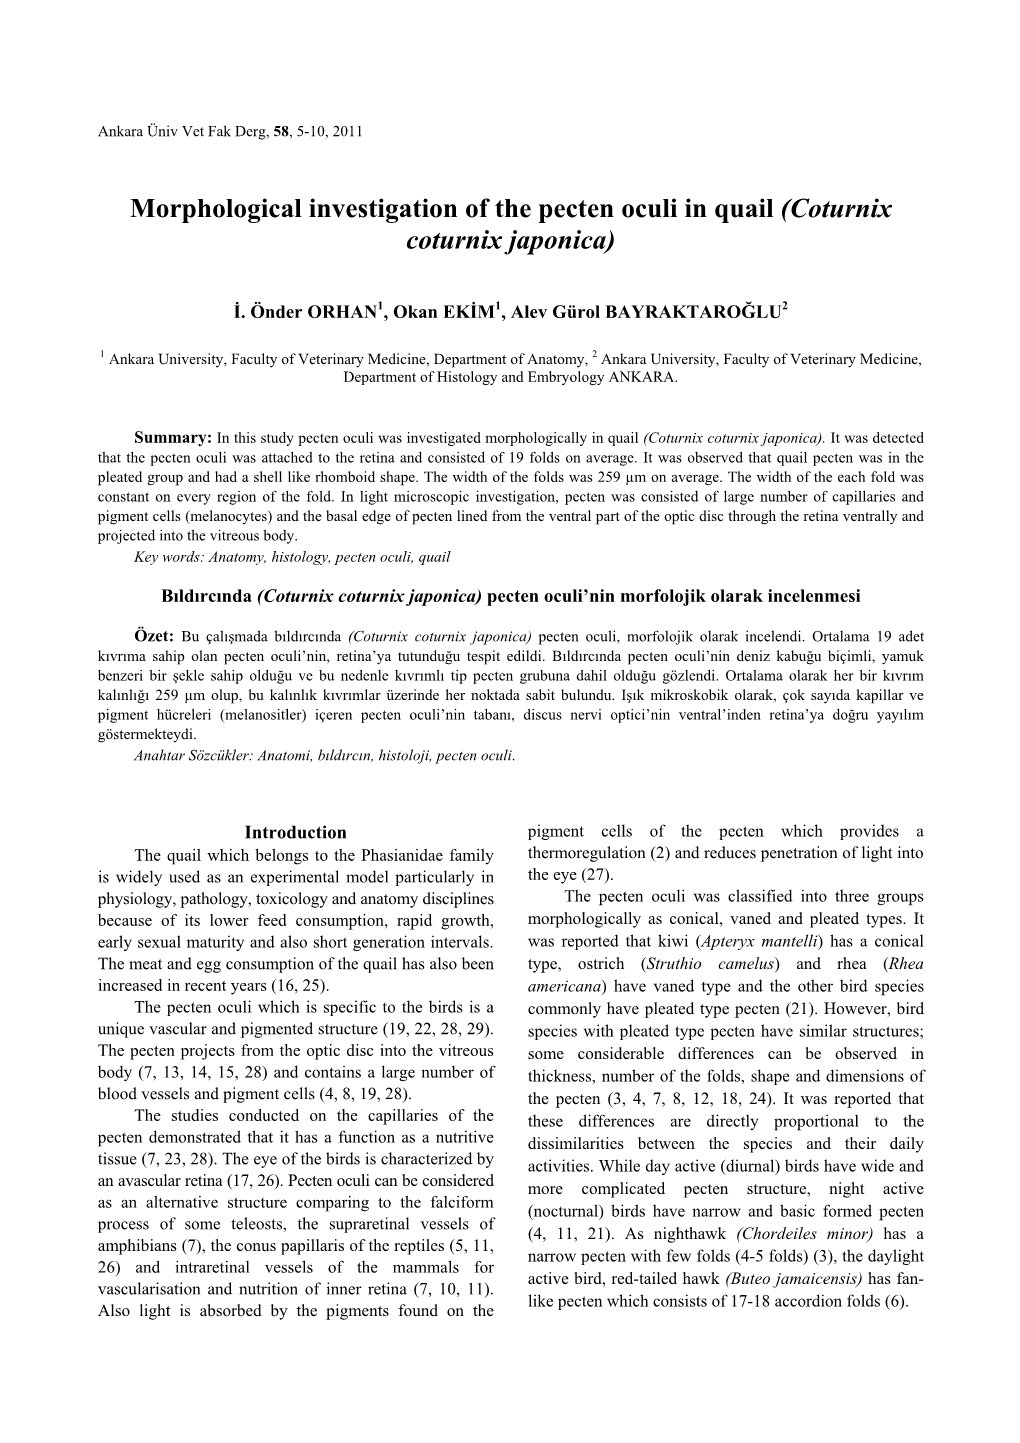 Morphological Investigation of the Pecten Oculi in Quail (Coturnix Coturnix Japonica)